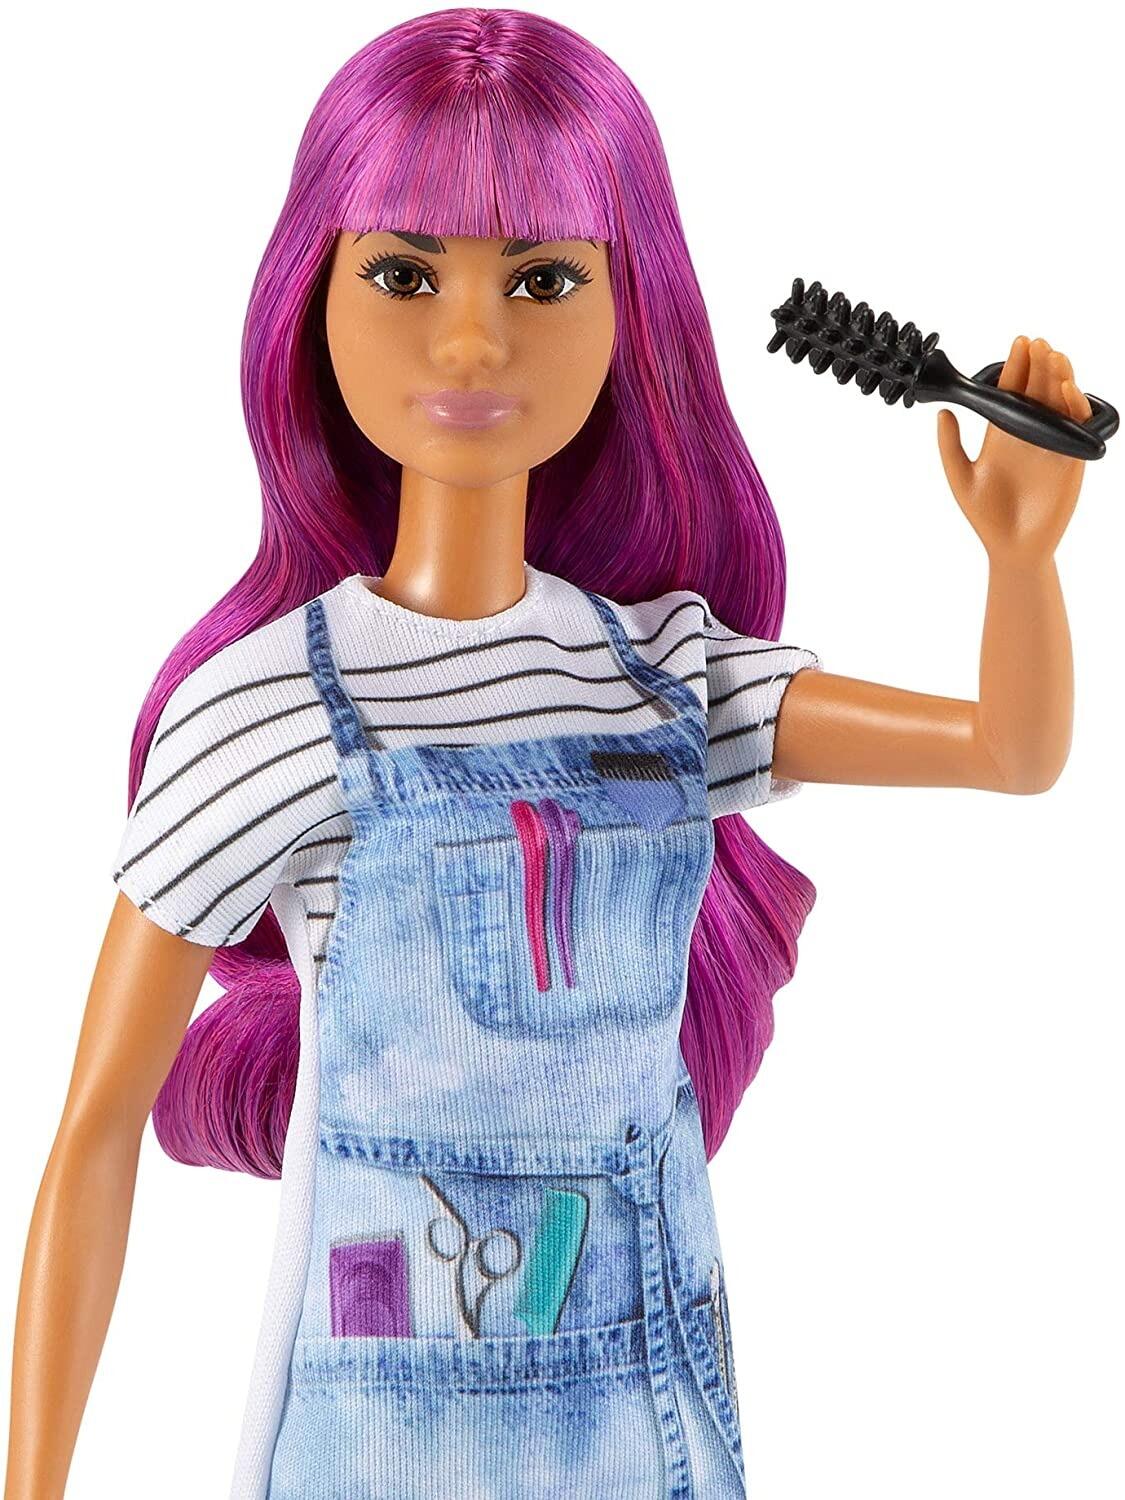 Barbie Careers Salon Stylist Barbie Doll